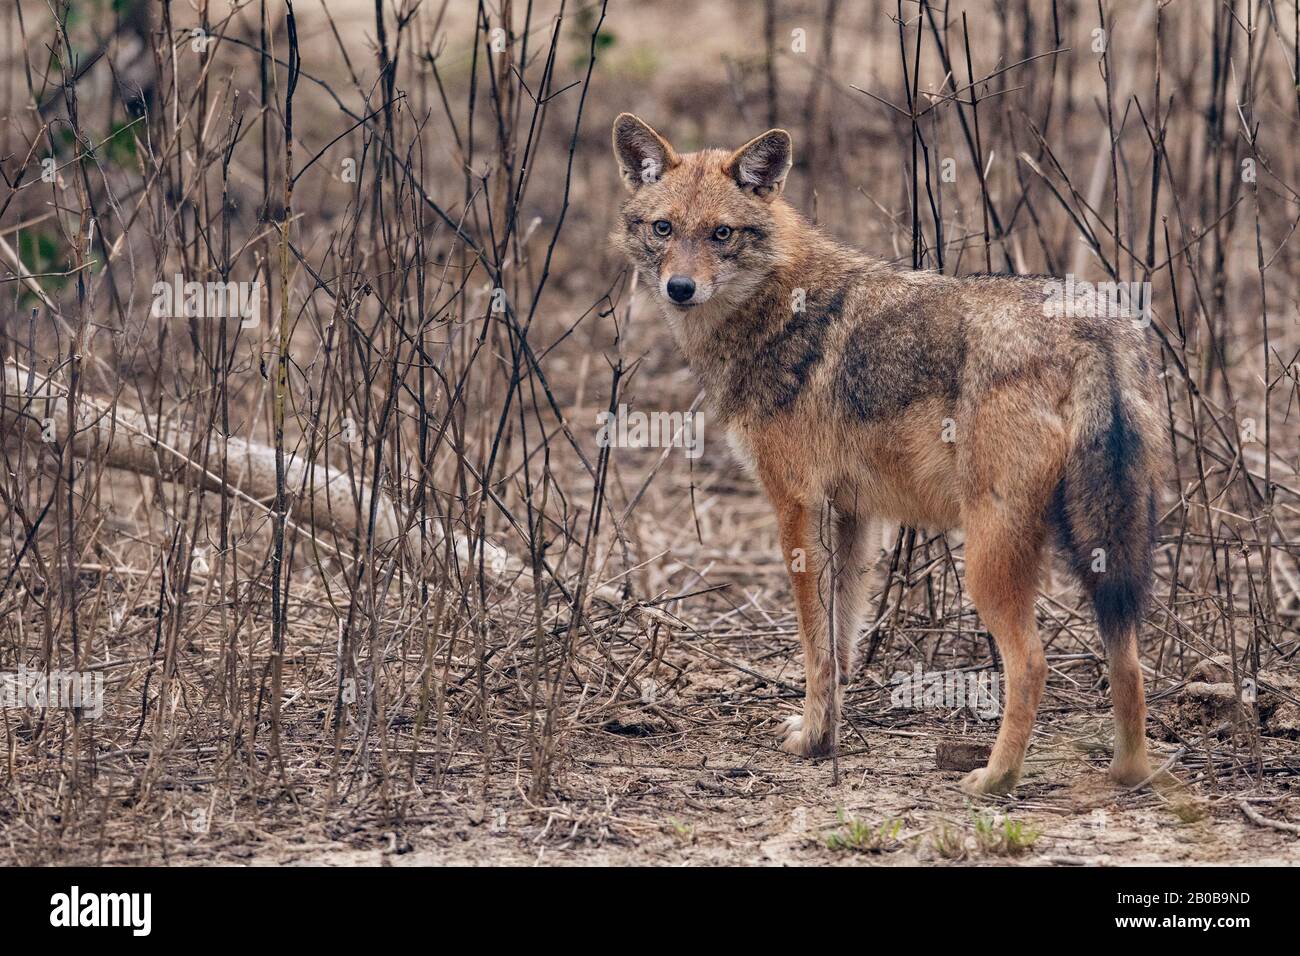 Parco Nazionale Di Keoladeo, Bharatpur, Rajasthan, India. Indiano Jackal, Canis aureus indicus Foto Stock